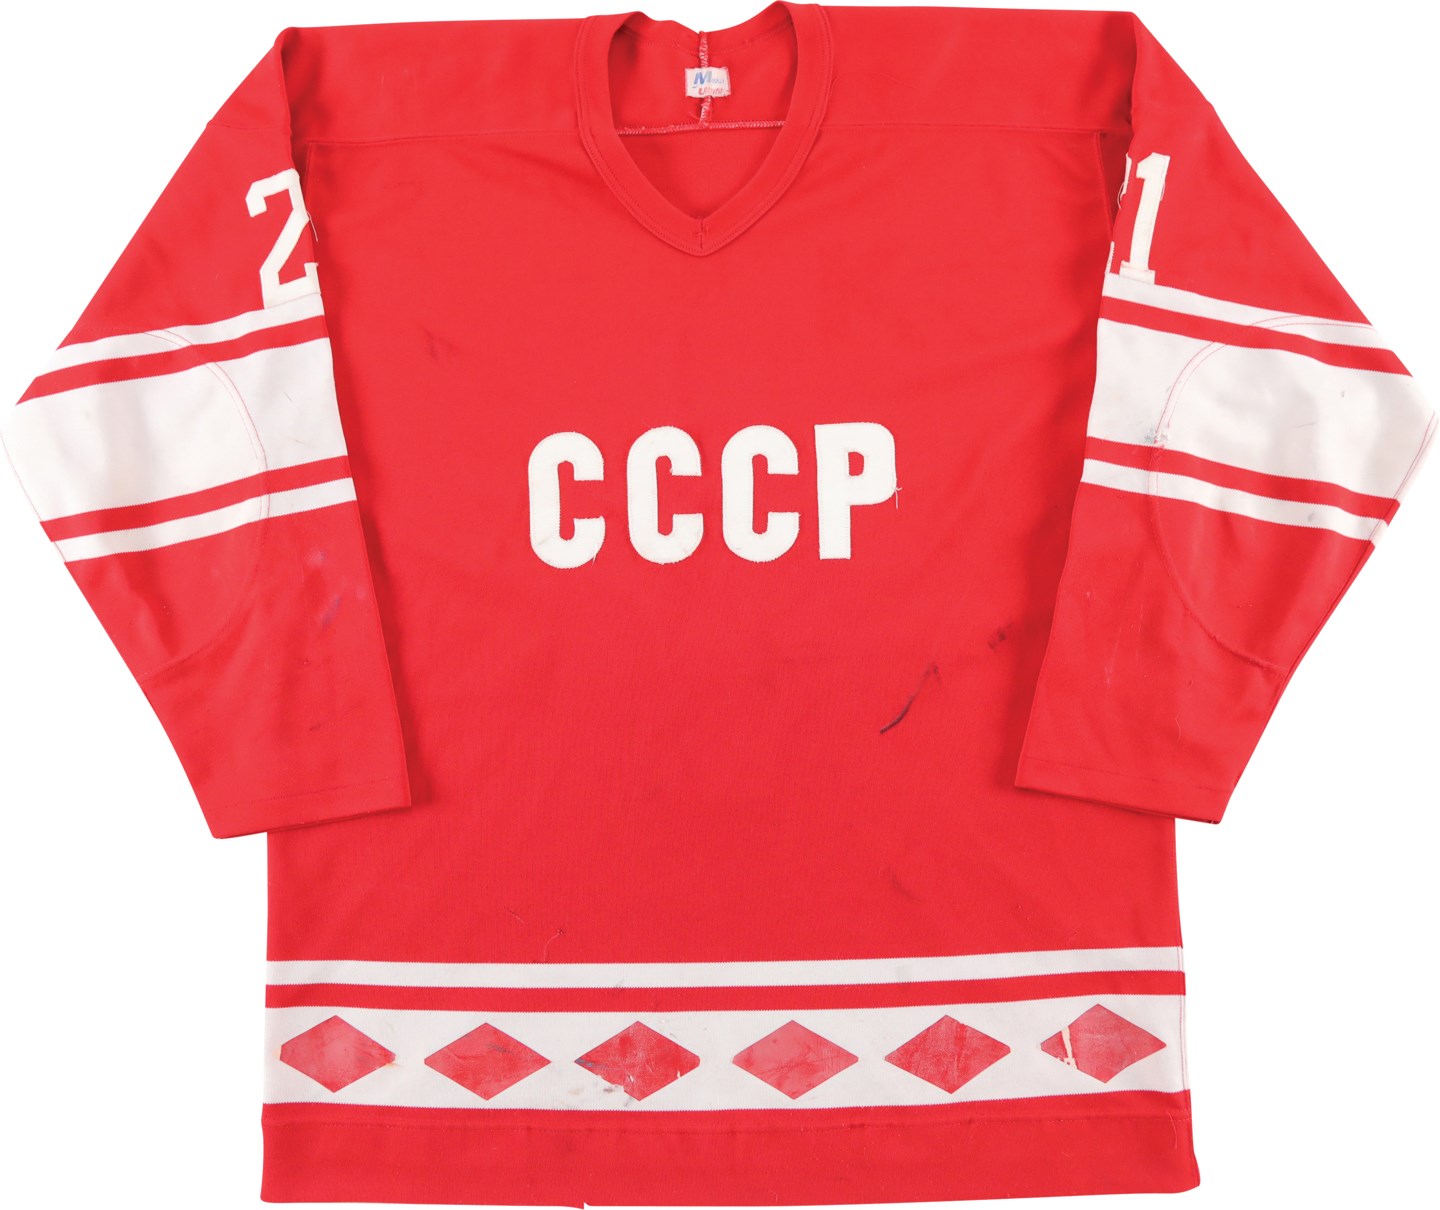 Hockey - Early 1980s Soviet Union Men's National Ice Hockey Game Worn Jersey